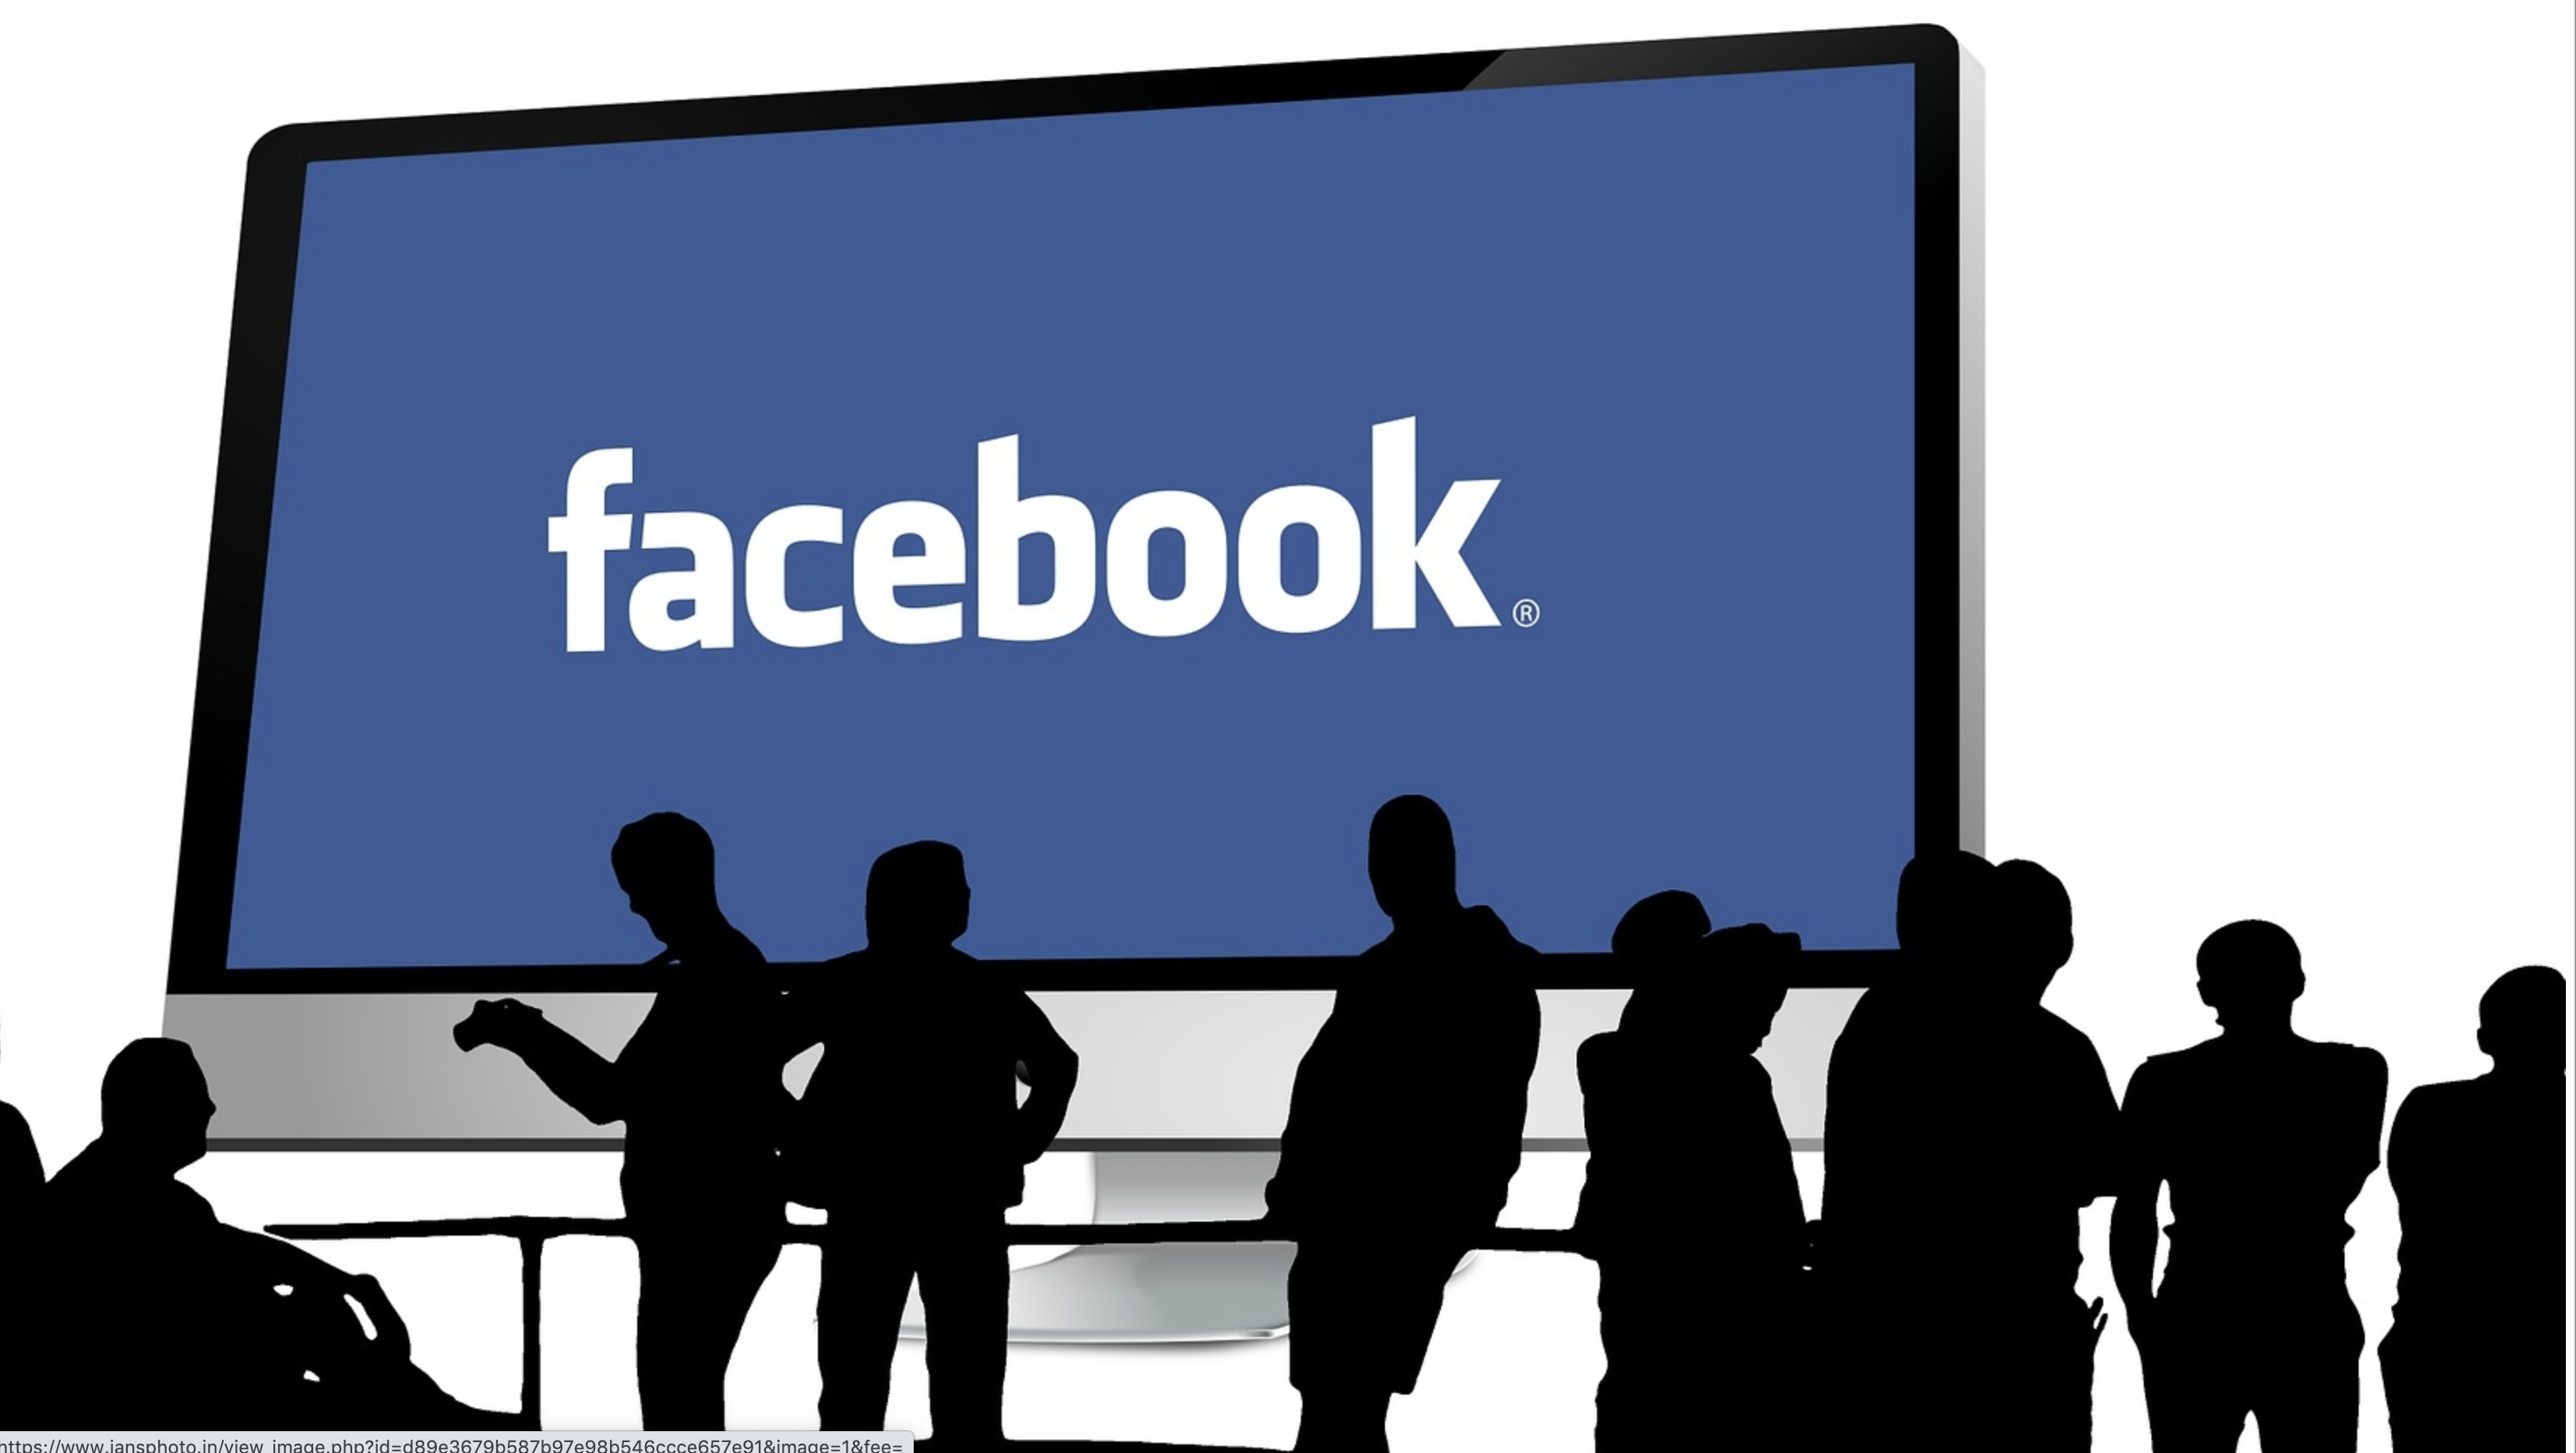 mark suckerberg facebook ceo, facebook users decline, market crashes and falls on facebook ceo